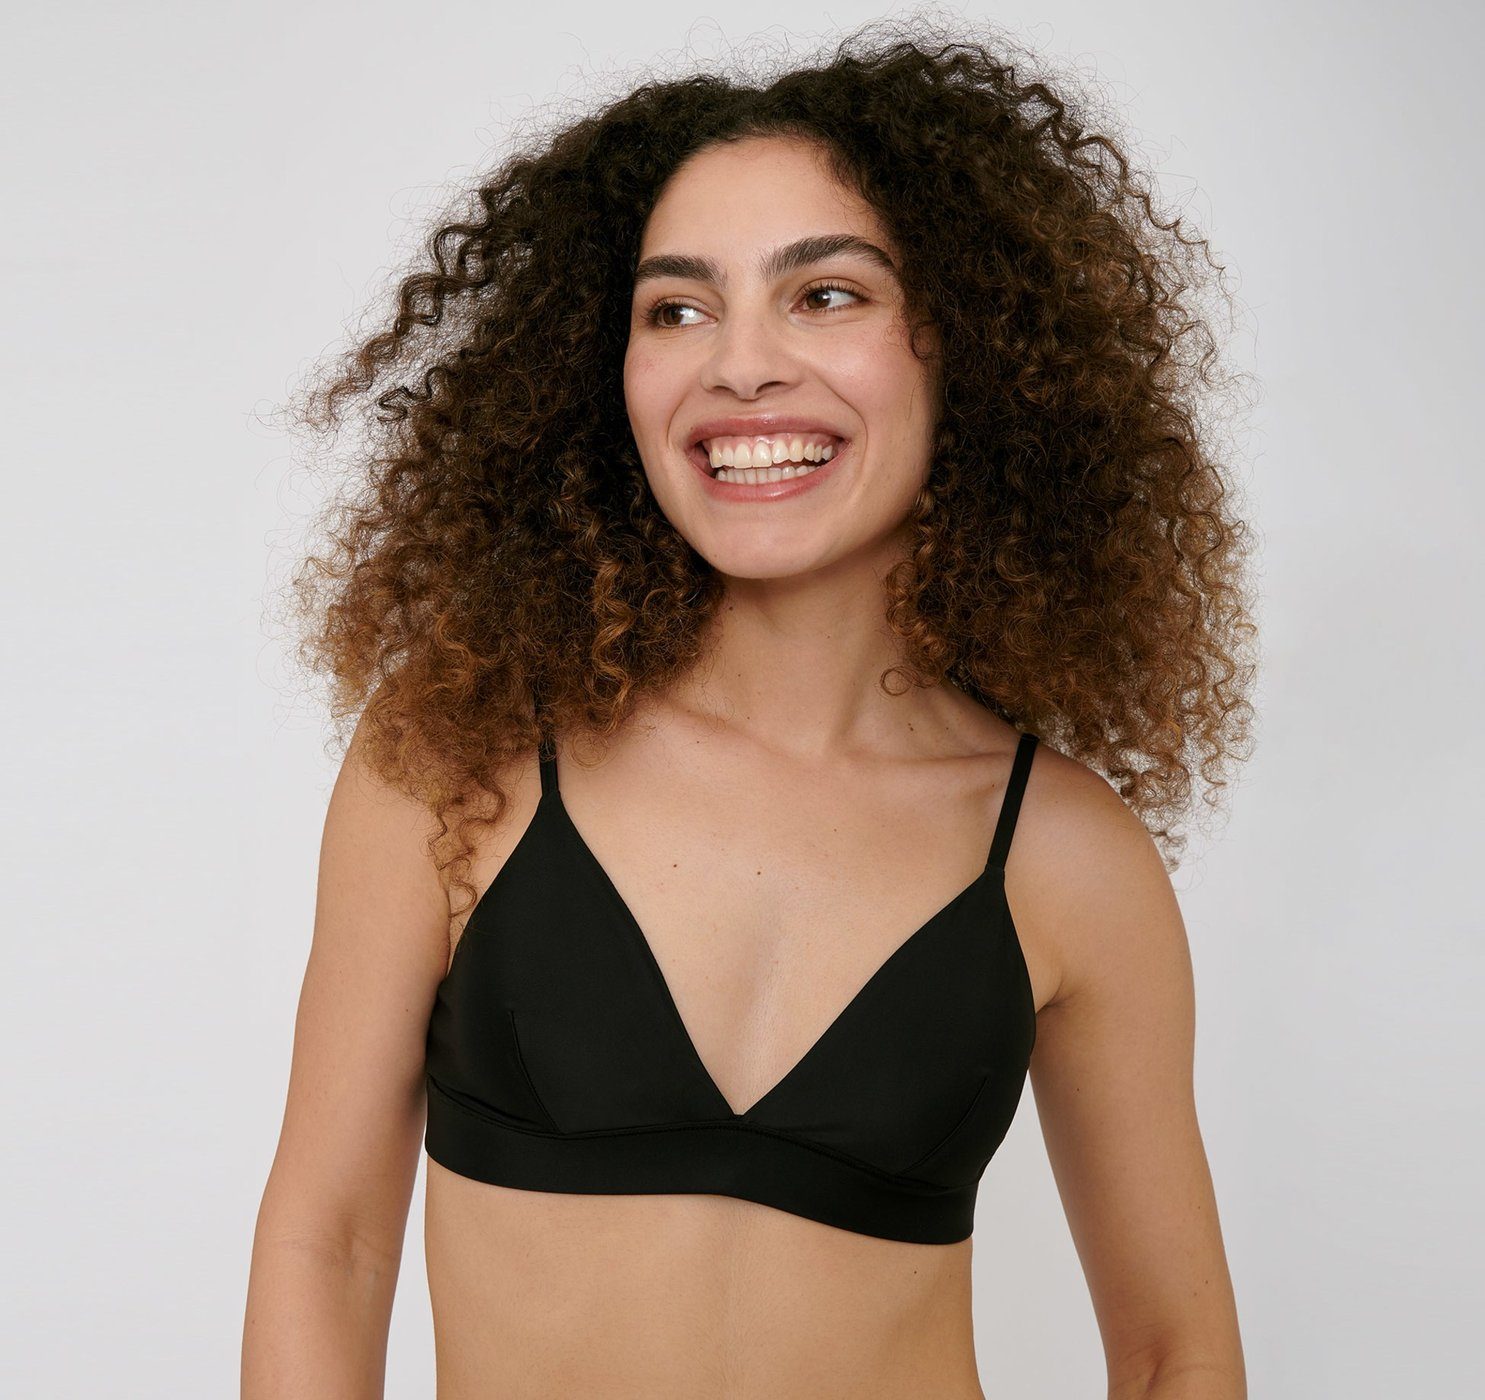 Organic Basics - W's Re-Swim Bikini Top - Recycled Nylon - Weekendbee - sustainable sportswear